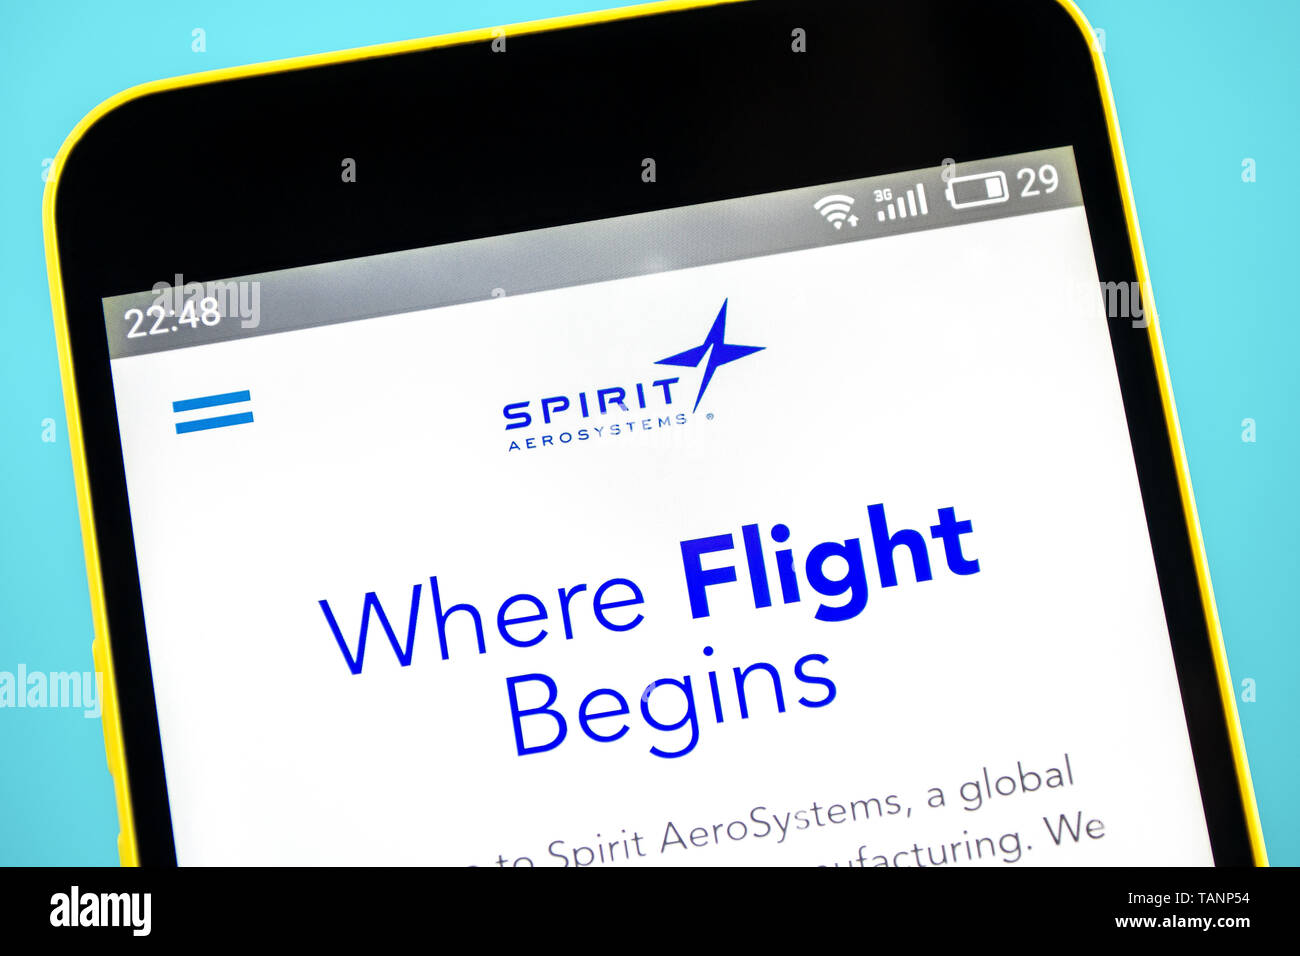 Berdyansk, Ukraine - 24 May 2019: Spirit AeroSystems aerospace website homepage. Spirit AeroSystems logo visible on the phone screen Stock Photo